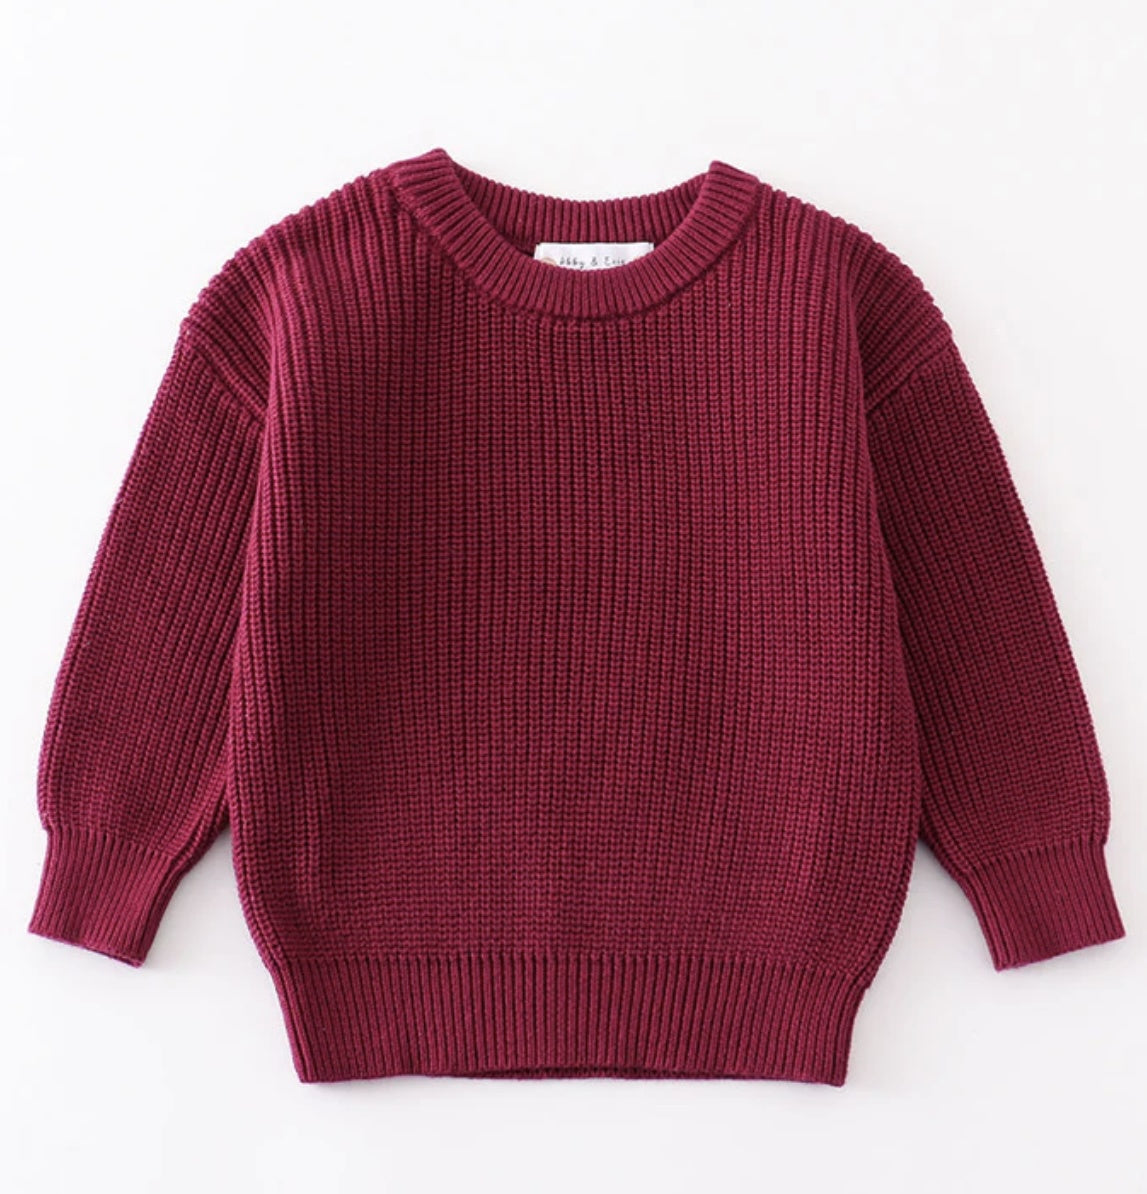 Knit Sweater in Plum